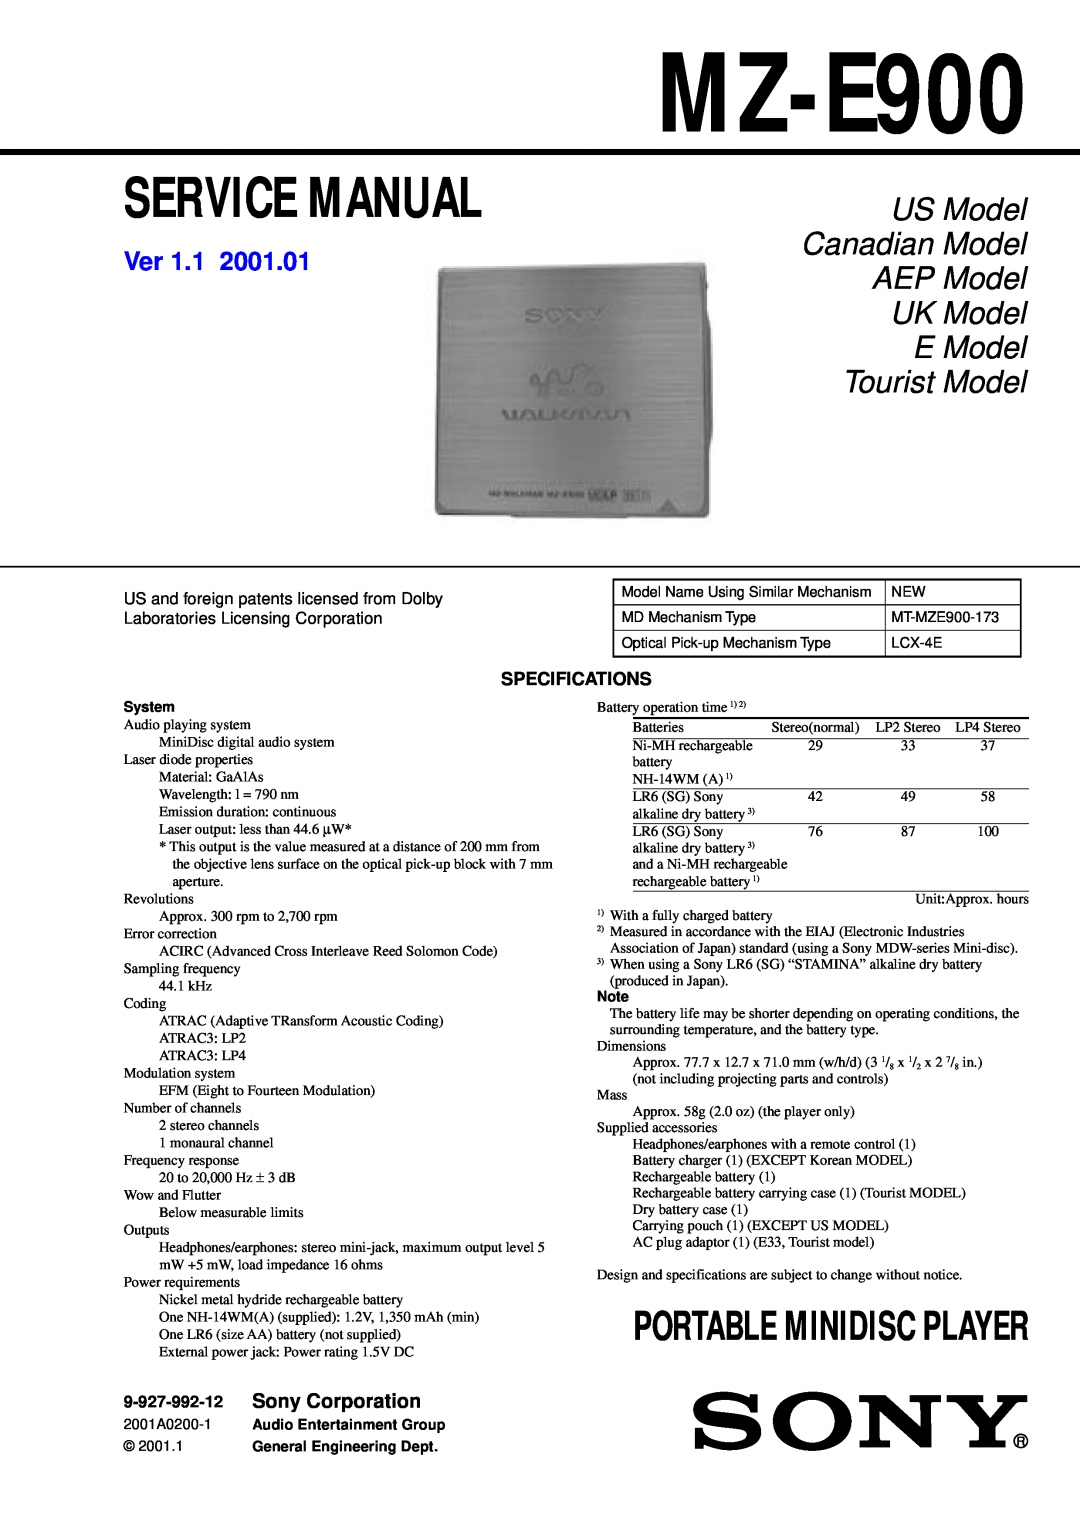 Sony MZ-E900 specifications US Model Canadian Model AEP Model UK Model, E Model Tourist Model, Portable Minidisc Player 